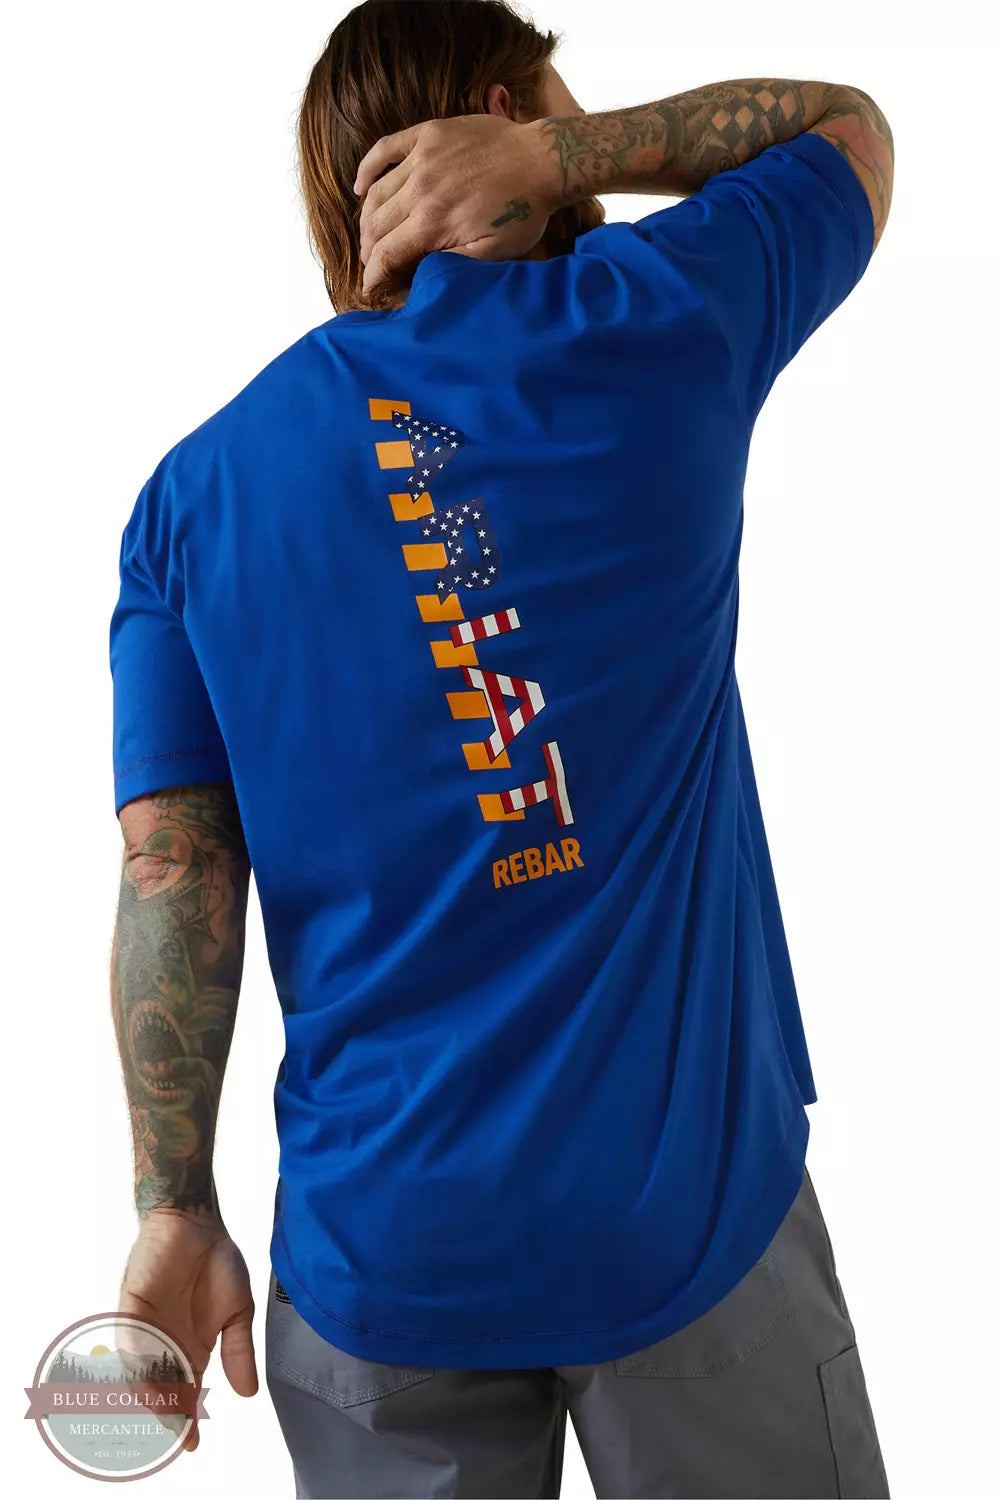 Ariat 10043560 Rebar Workman Logo T-Shirt in Royal Blue Back View